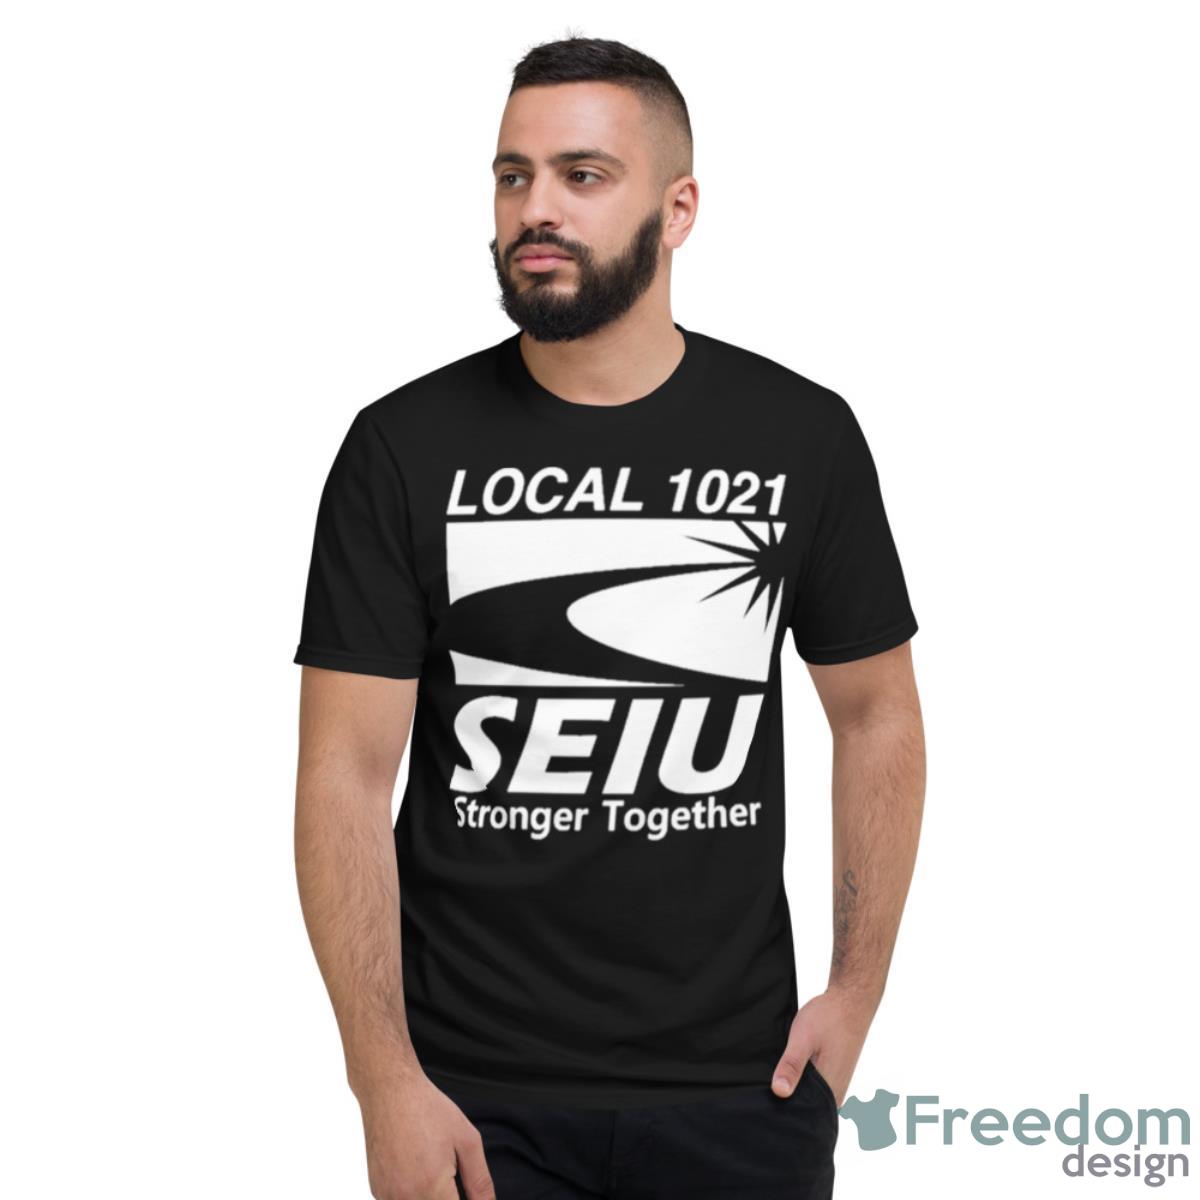 Local 1021 Seiu Stronger Together Shirt